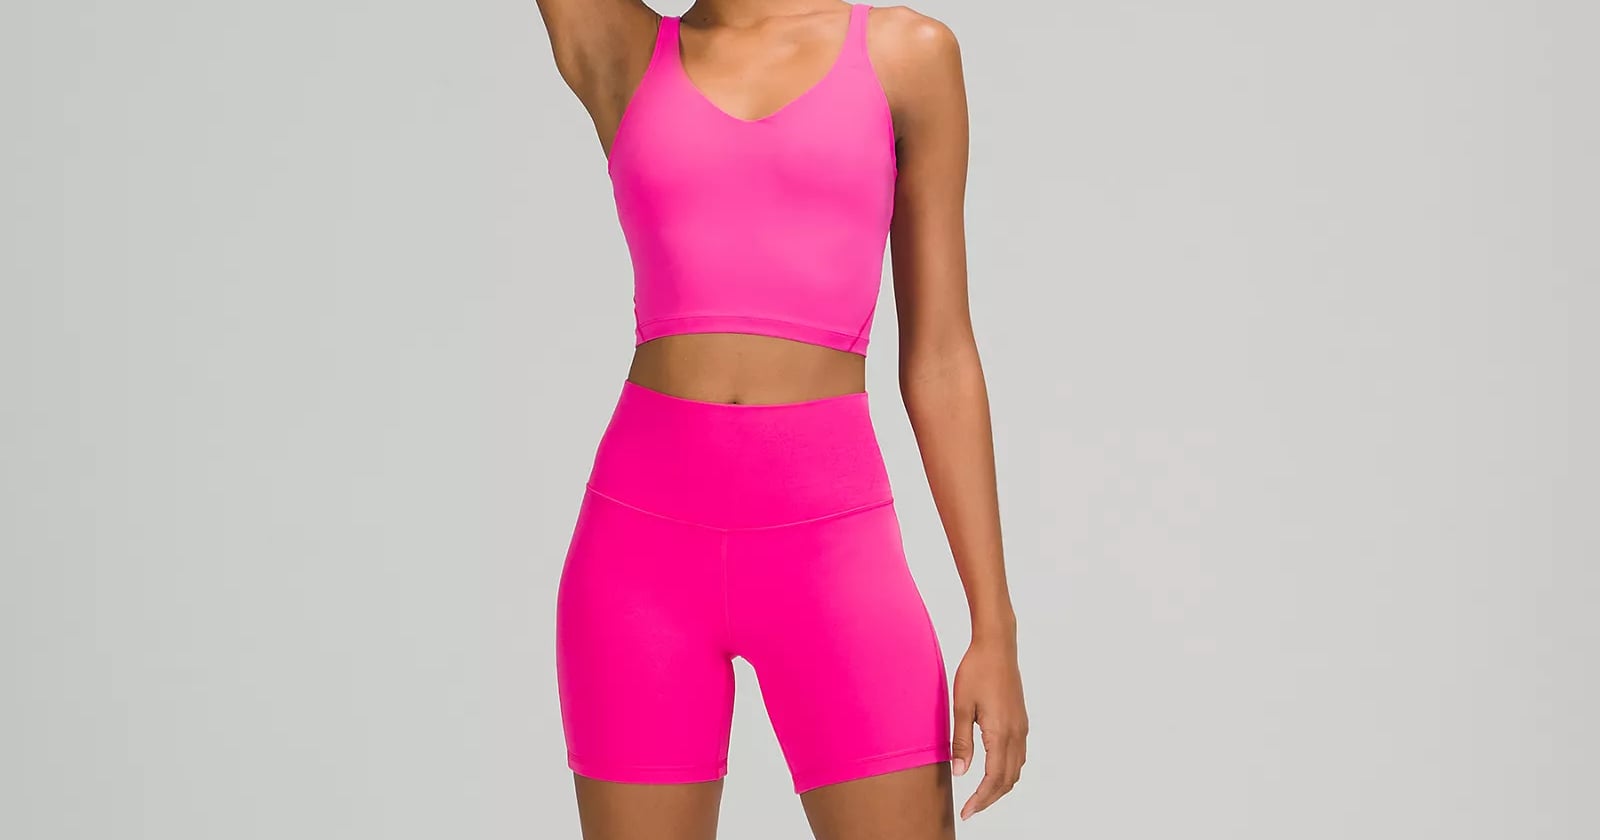 PEASKJP Workout Outfits for Women Seamless Tank Top Sport Bra High Waist  Biker Shorts GYM Yoga Exercise Outfits, Hot Pink M 